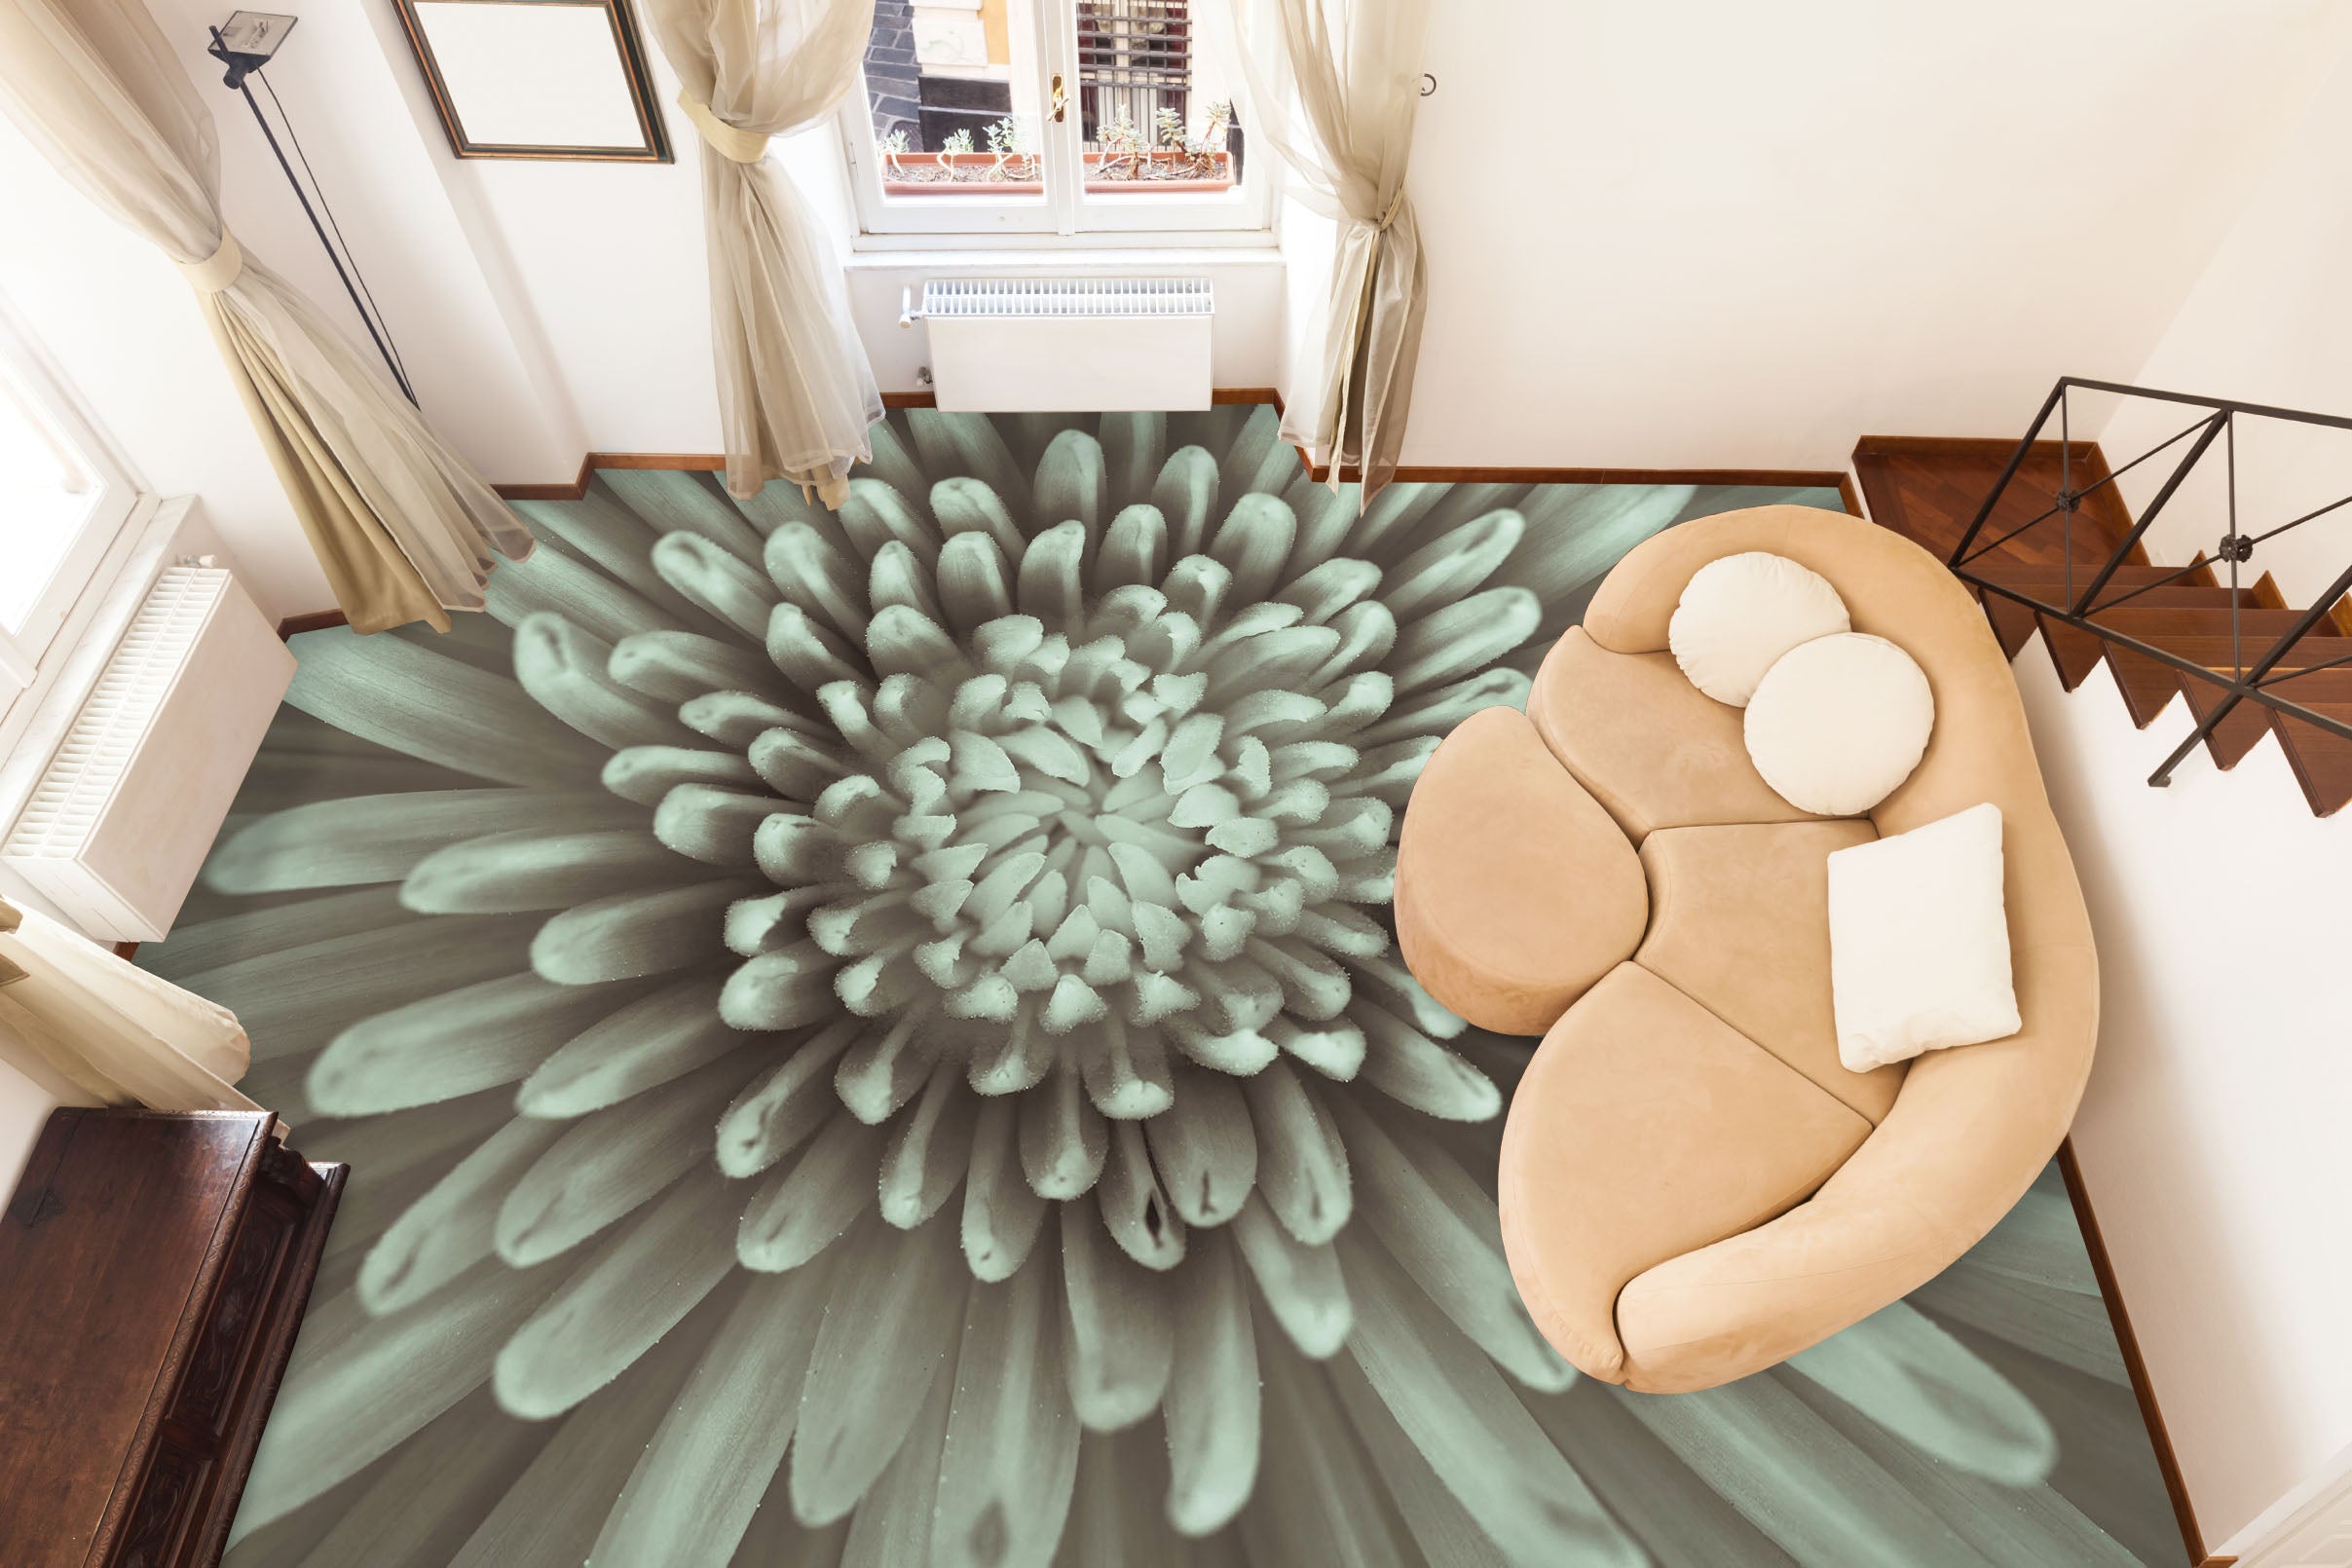 3D Chrysanthemum 98171 Adrian Chesterman Floor Mural  Wallpaper Murals Self-Adhesive Removable Print Epoxy